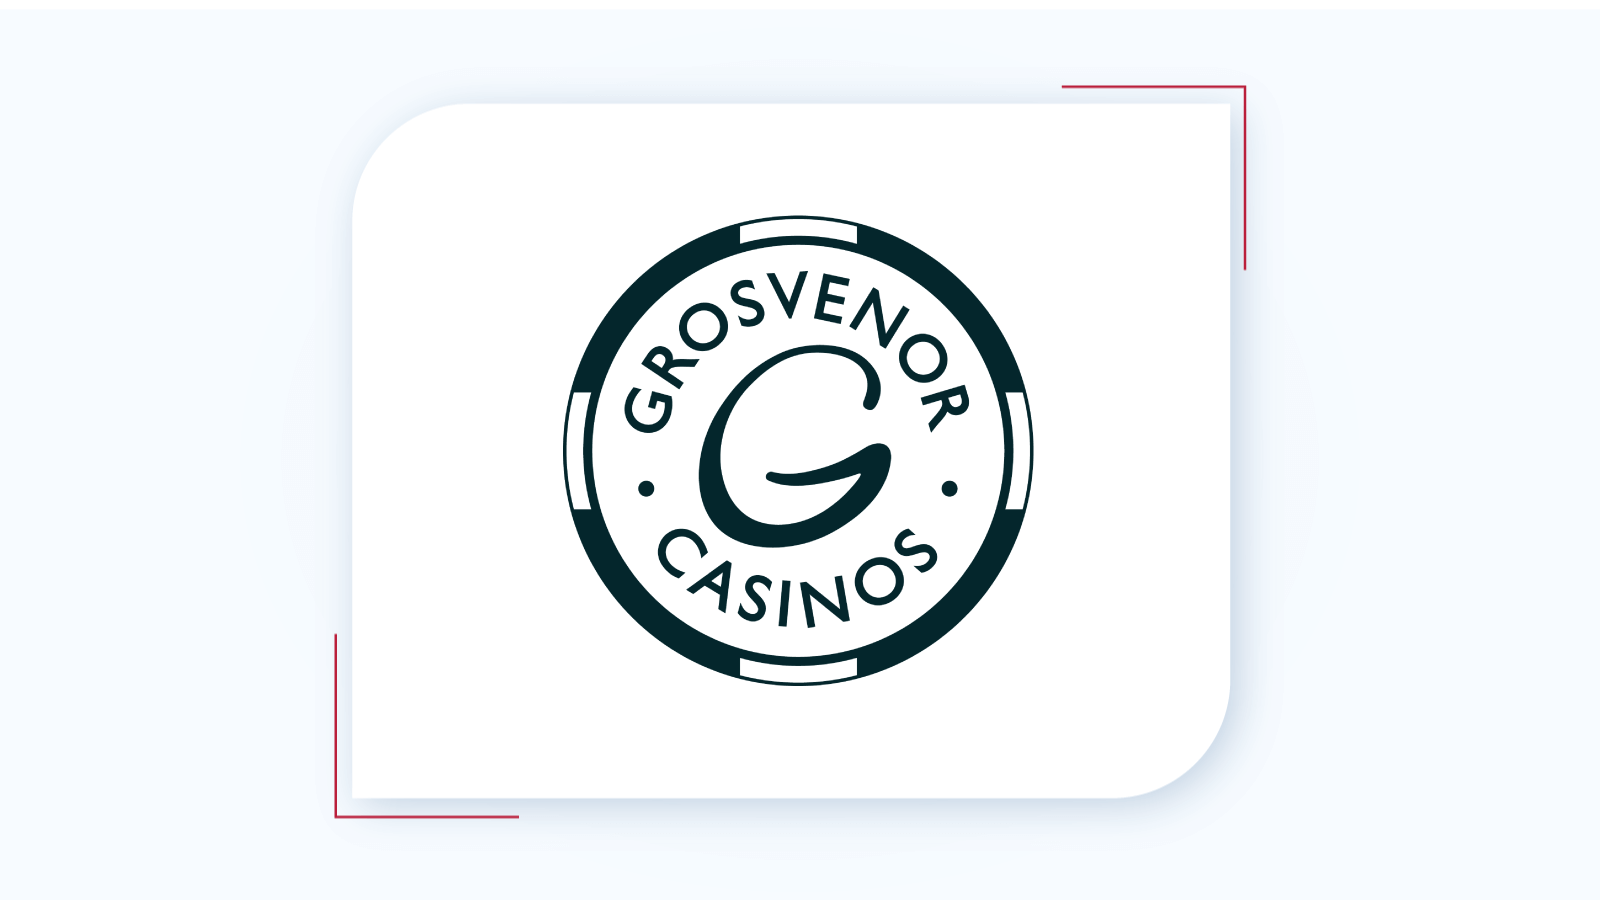 Grosvenor-Casino-Best-£20-deposit-casino-bonus-in-the-UK-overall